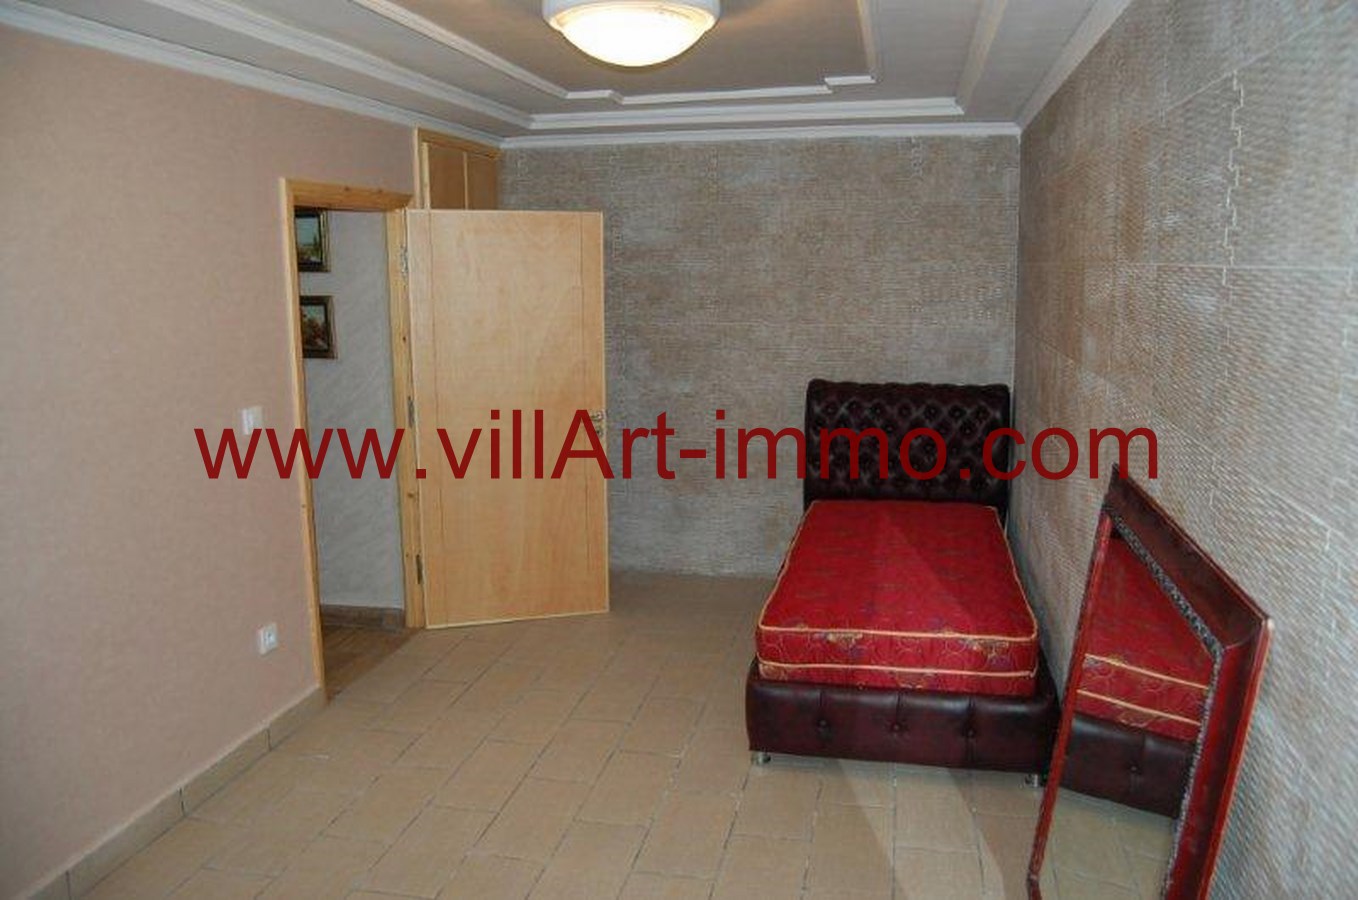 6-Location-Appartement-Tanger-Chambre 2-L741-Villart immo